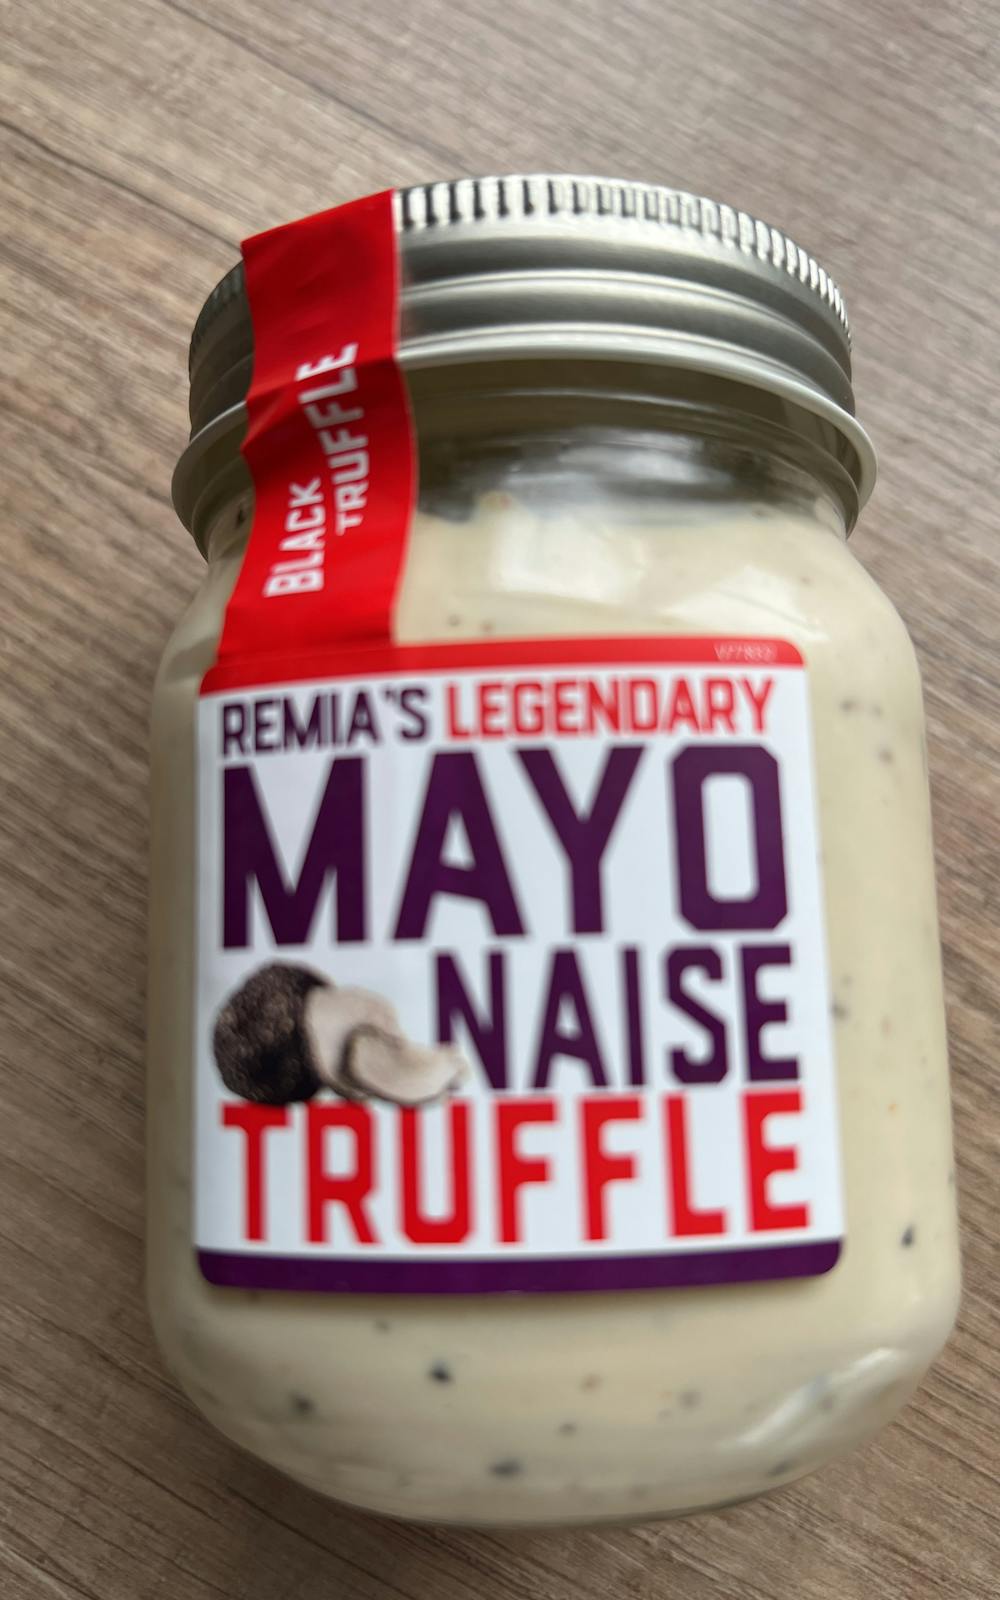 Mayonaise, truffle, Remia